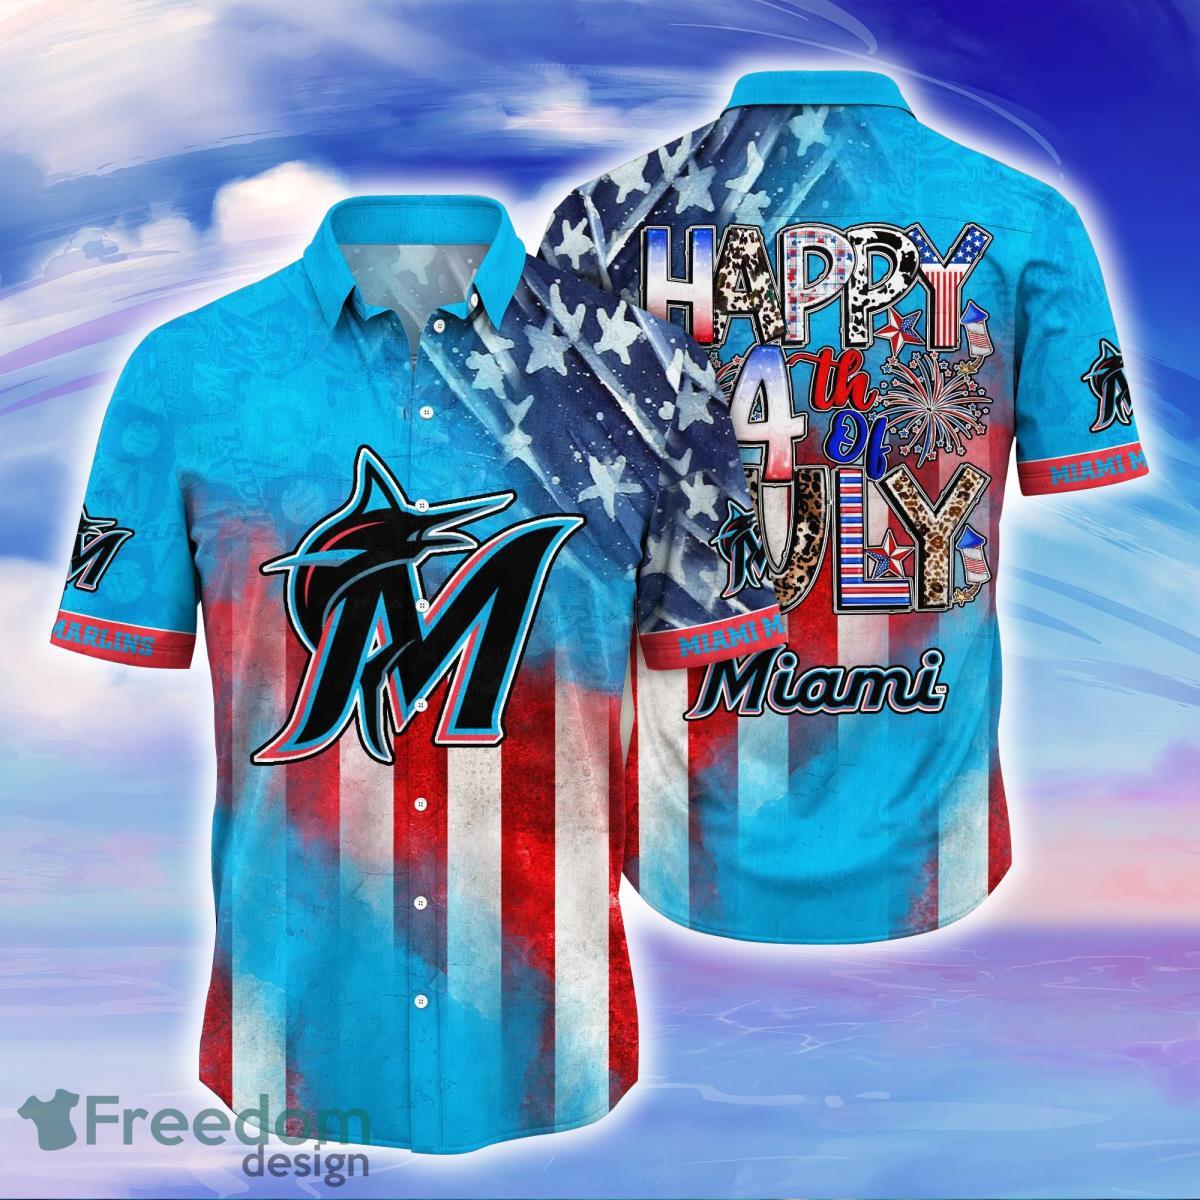 Milwaukee Brewers MLB Flower Hawaiian Shirt Special Gift For Men Women Fans  - Freedomdesign